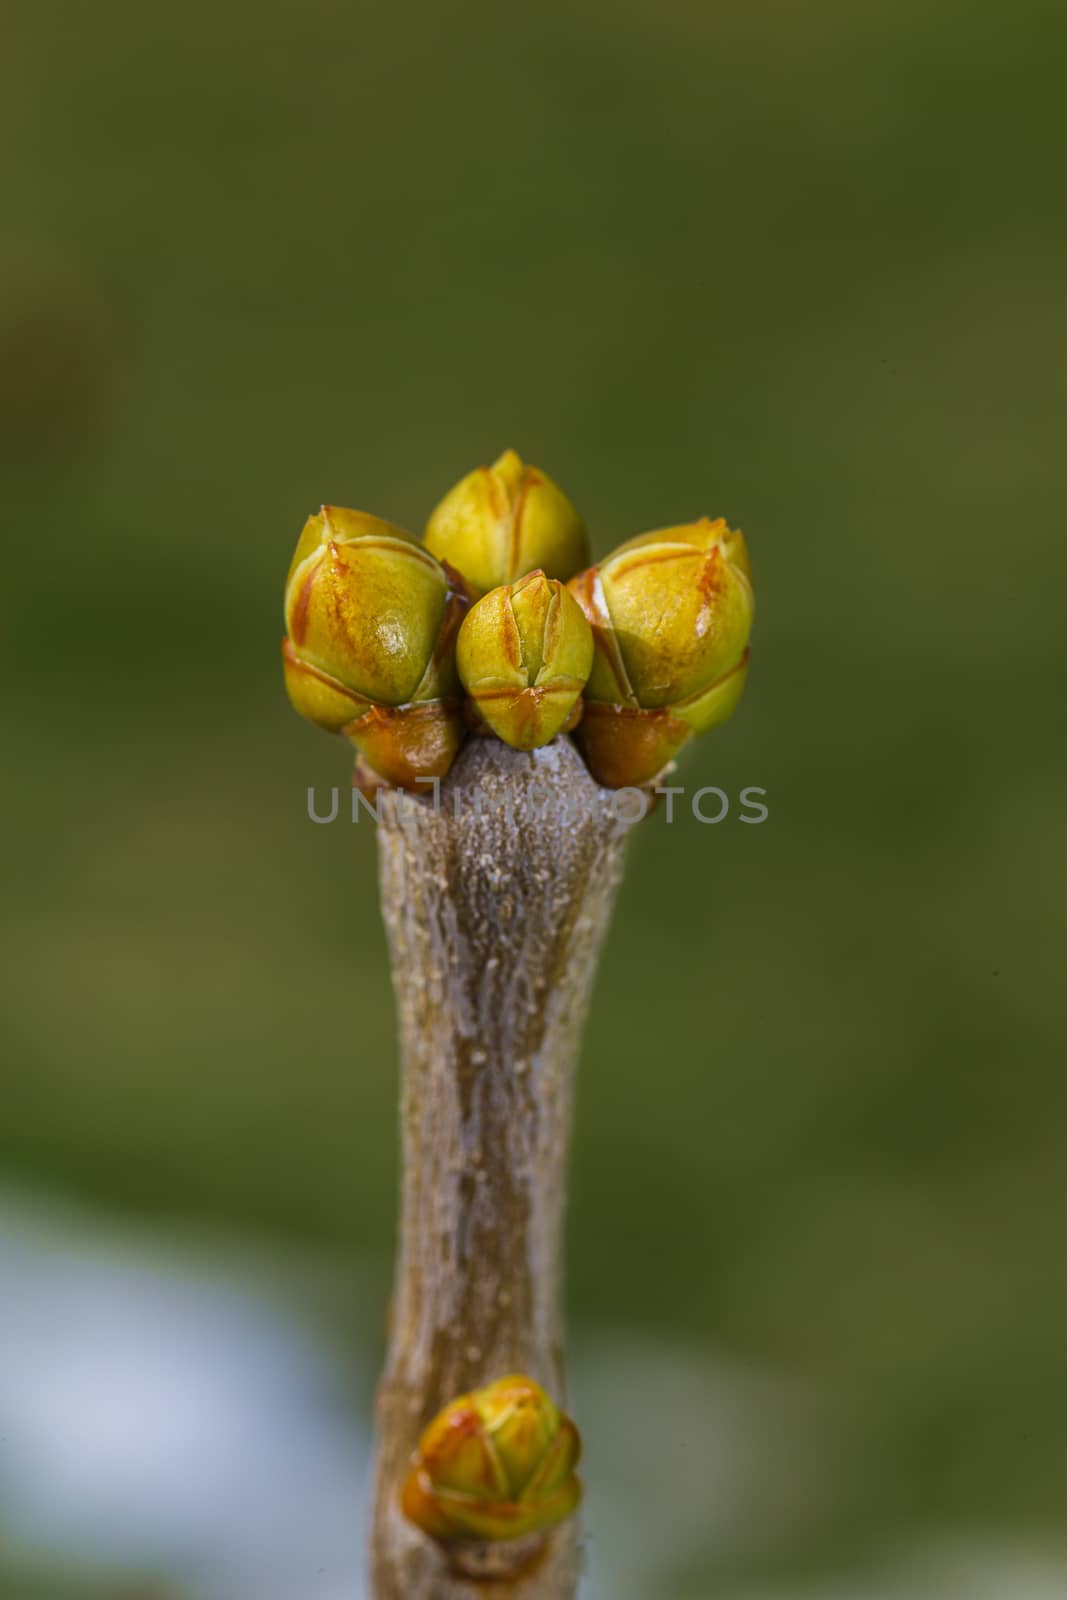 Lilac buds by mypstudio